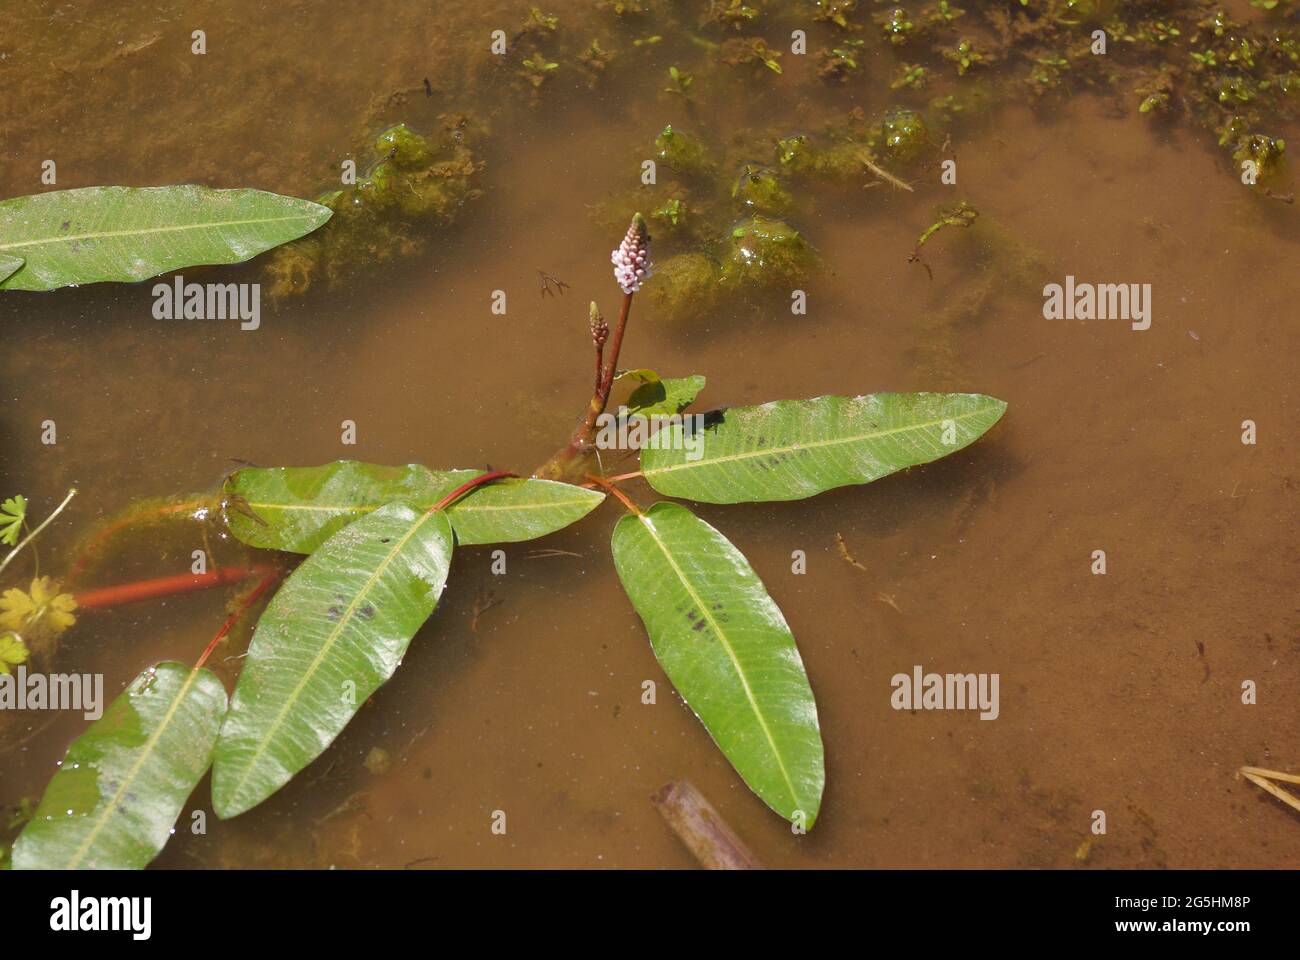 Persicaria amphibia (syn. Polygonum amphibium), knotweed family, common names: longroot smartweed, water knotweed, water smartweed, amphibious bistort Stock Photo